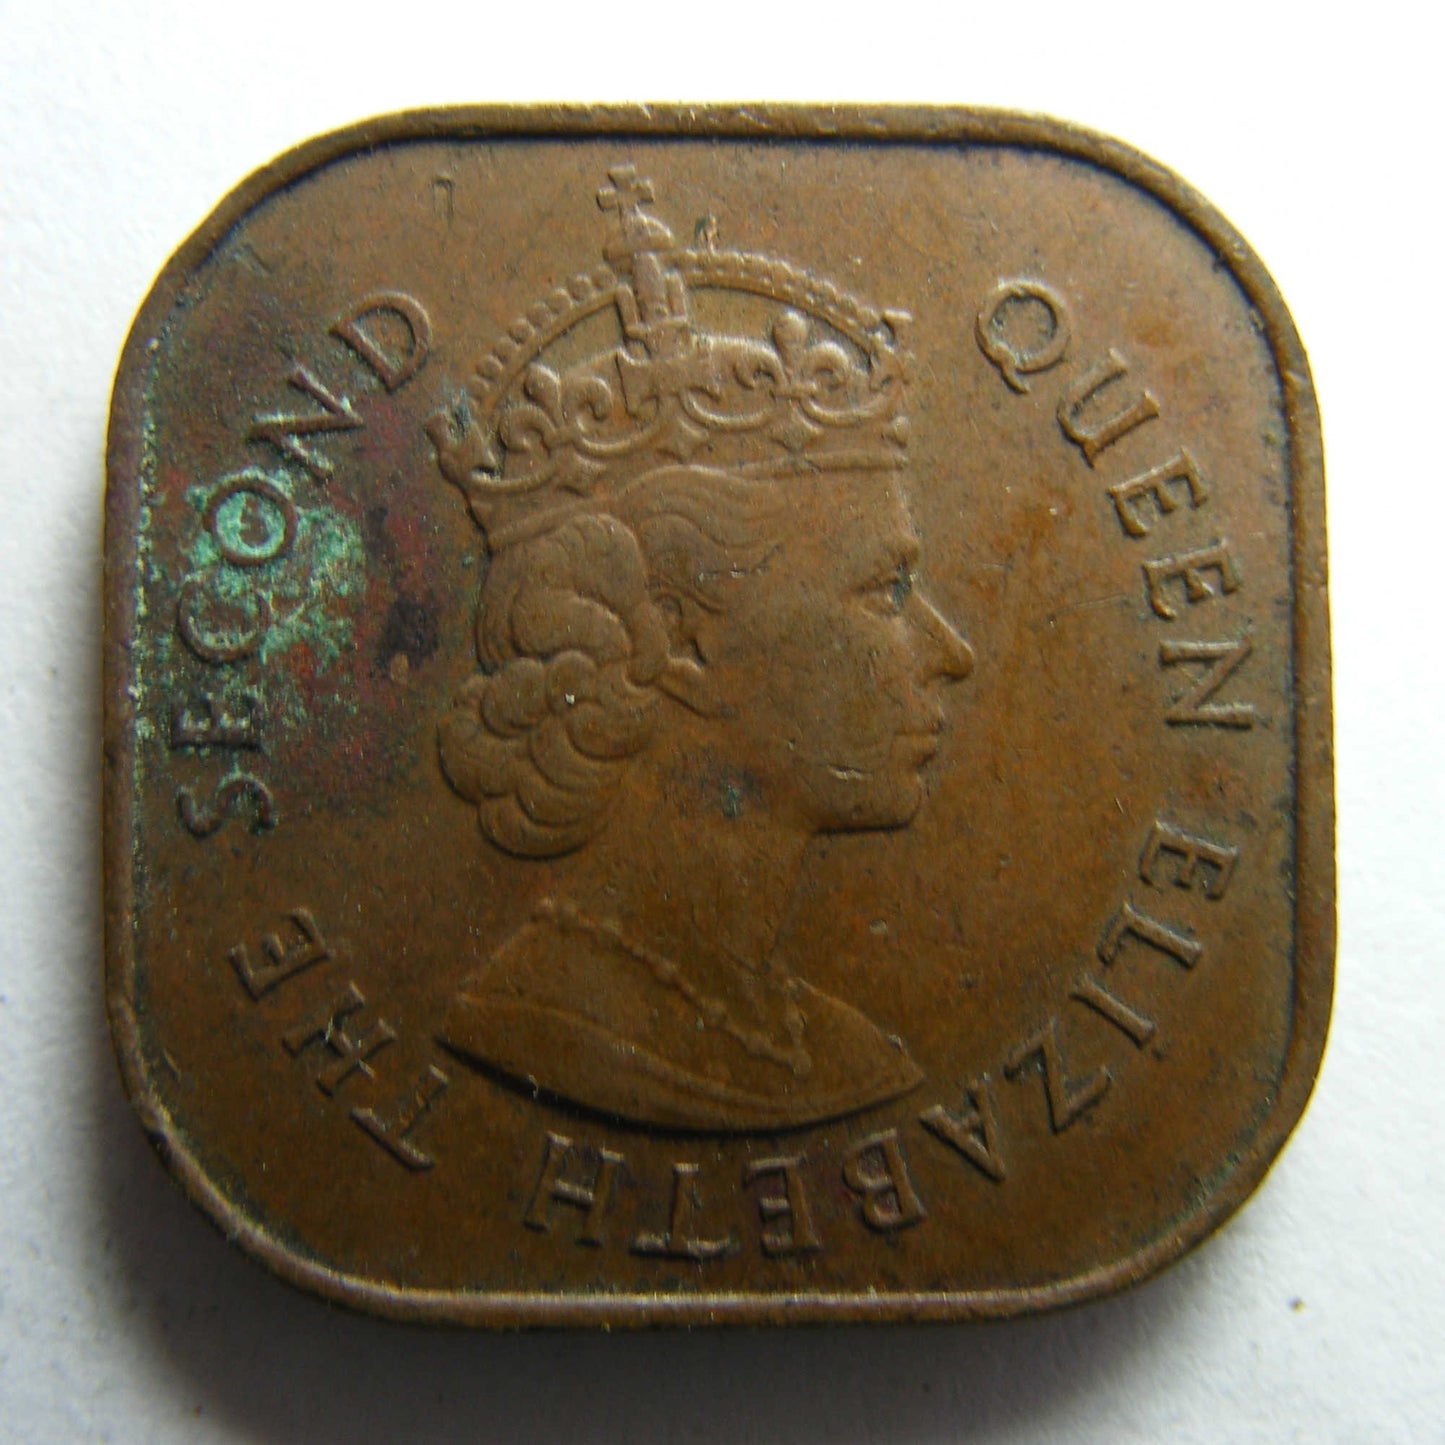 Malaya & British Borneo 1958 One Cent Queen Elizabeth II Coin